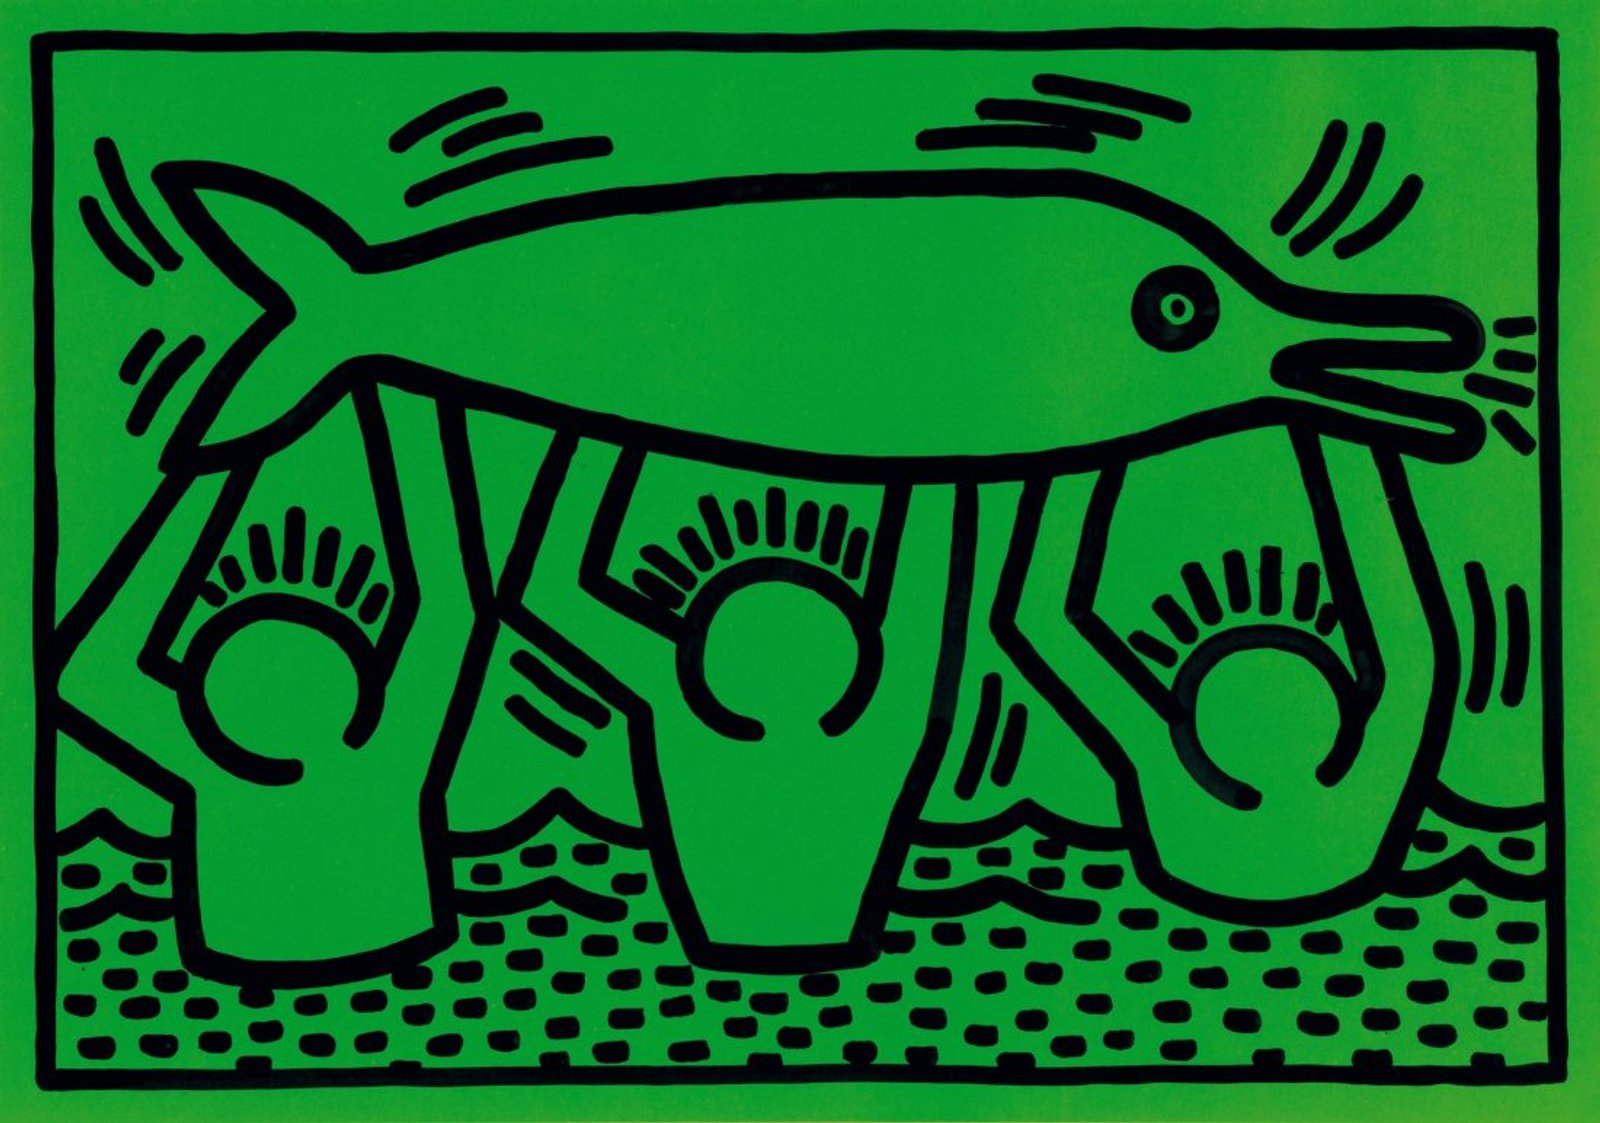 Keith Haring: Pop Art's Radiant Child